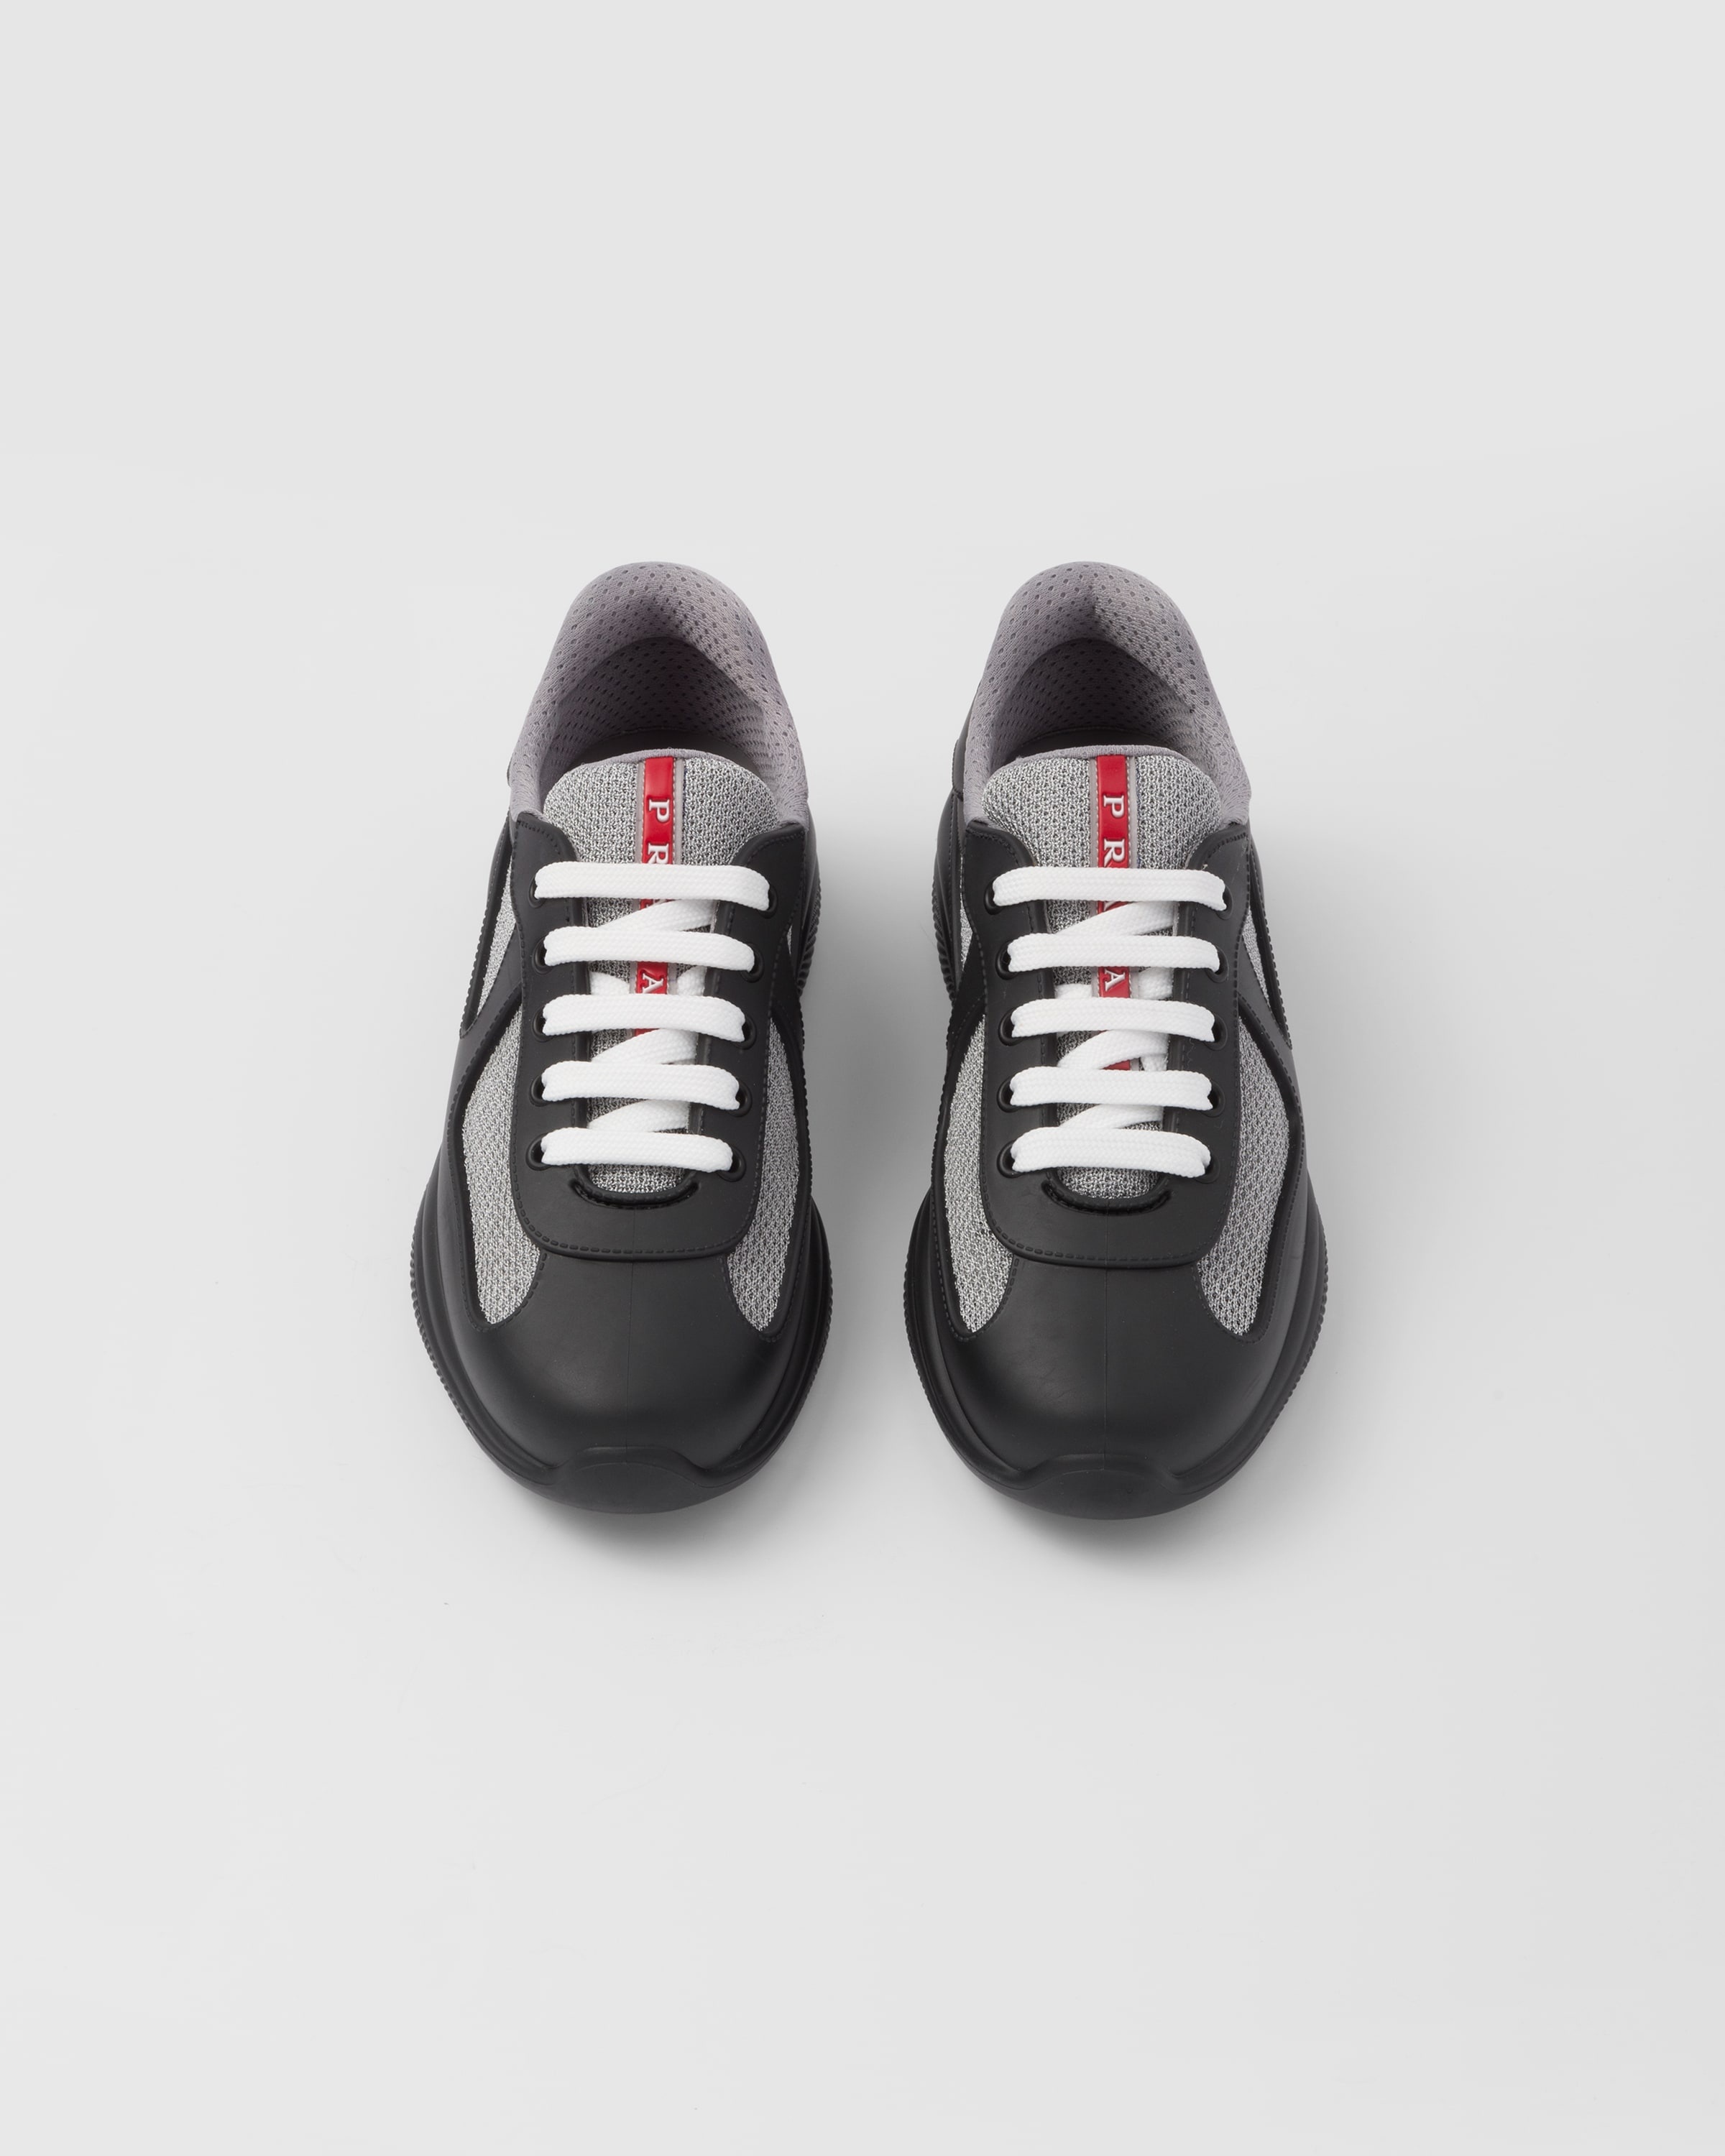 Prada America's Cup Soft rubber and bike fabric sneakers - 4